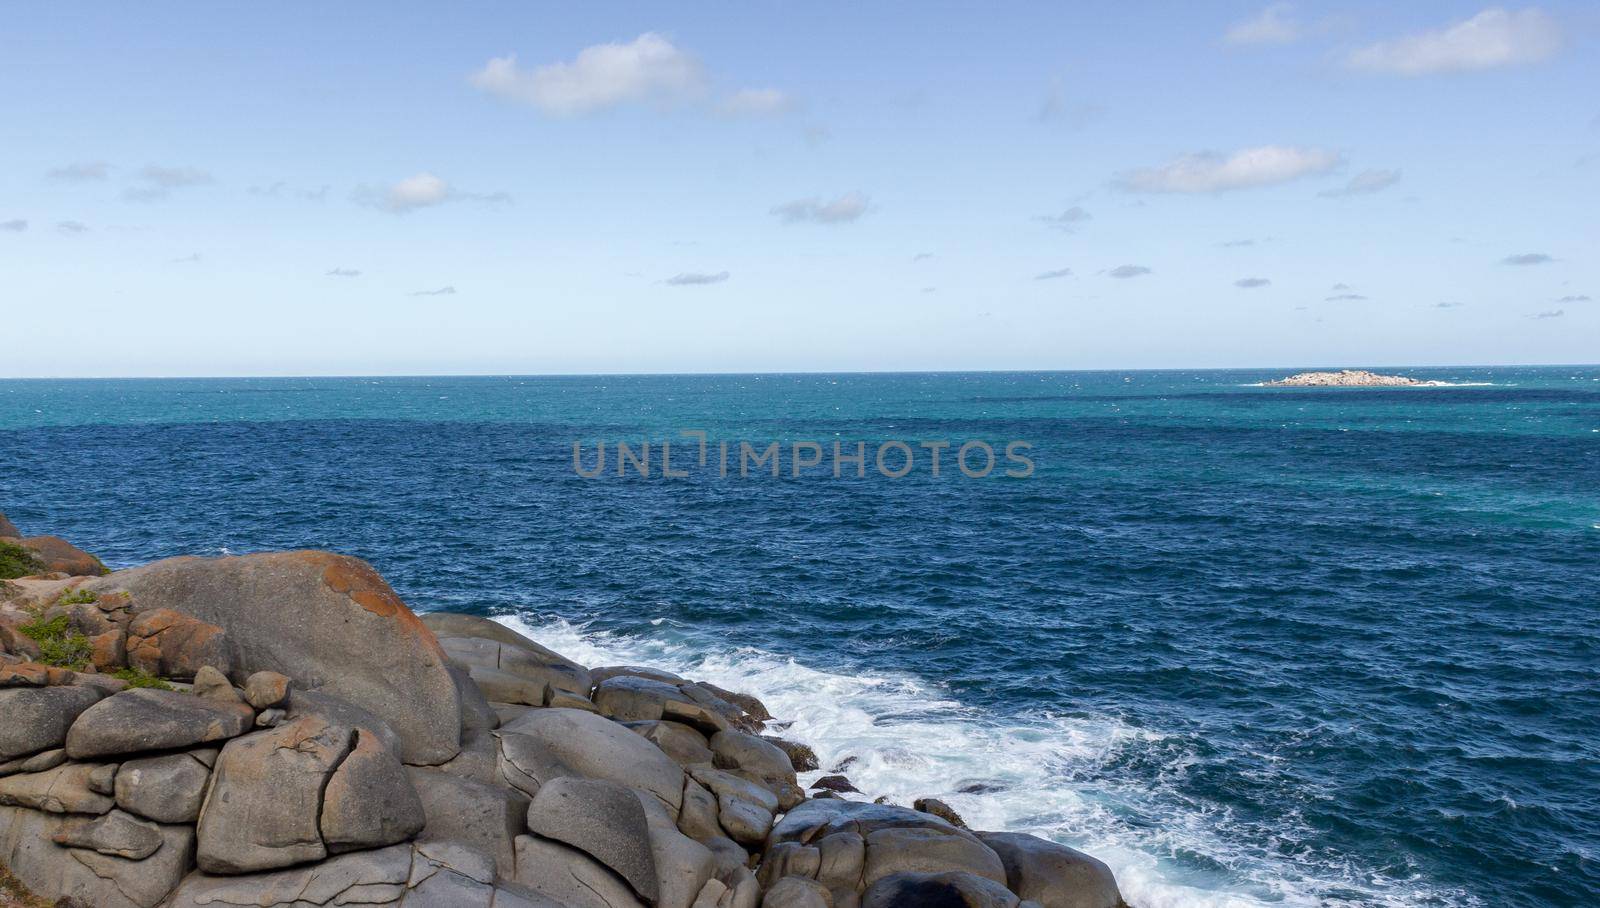 Sea shore and stones. Seascape at midday, australia